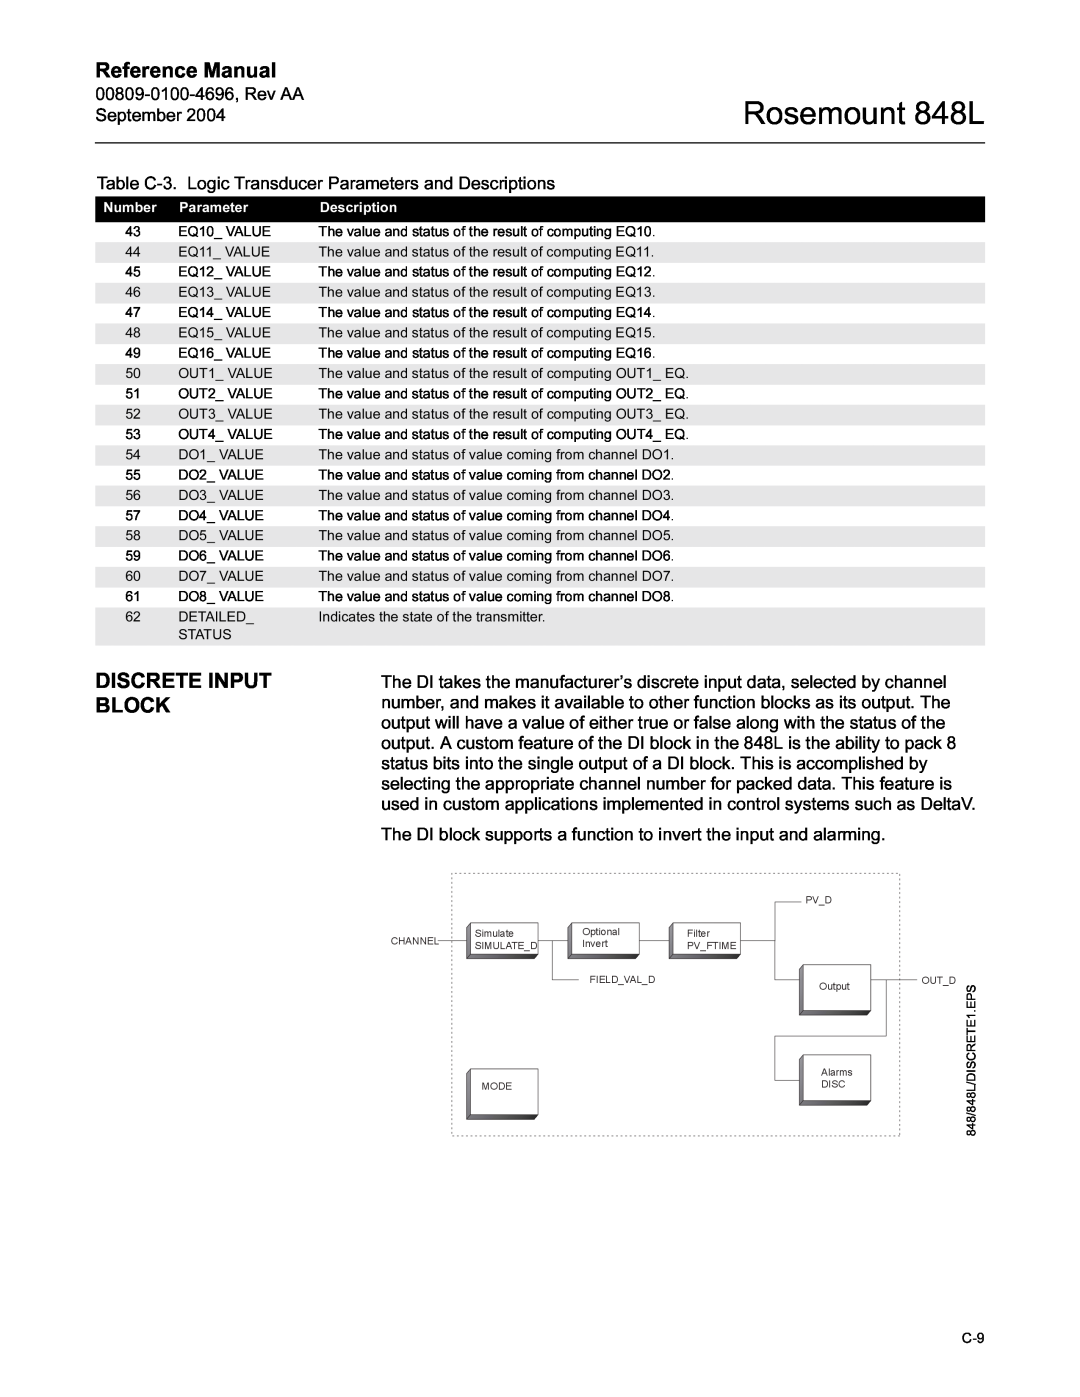 Emerson manual Discrete Input Block, Rosemount 848L, Reference Manual 